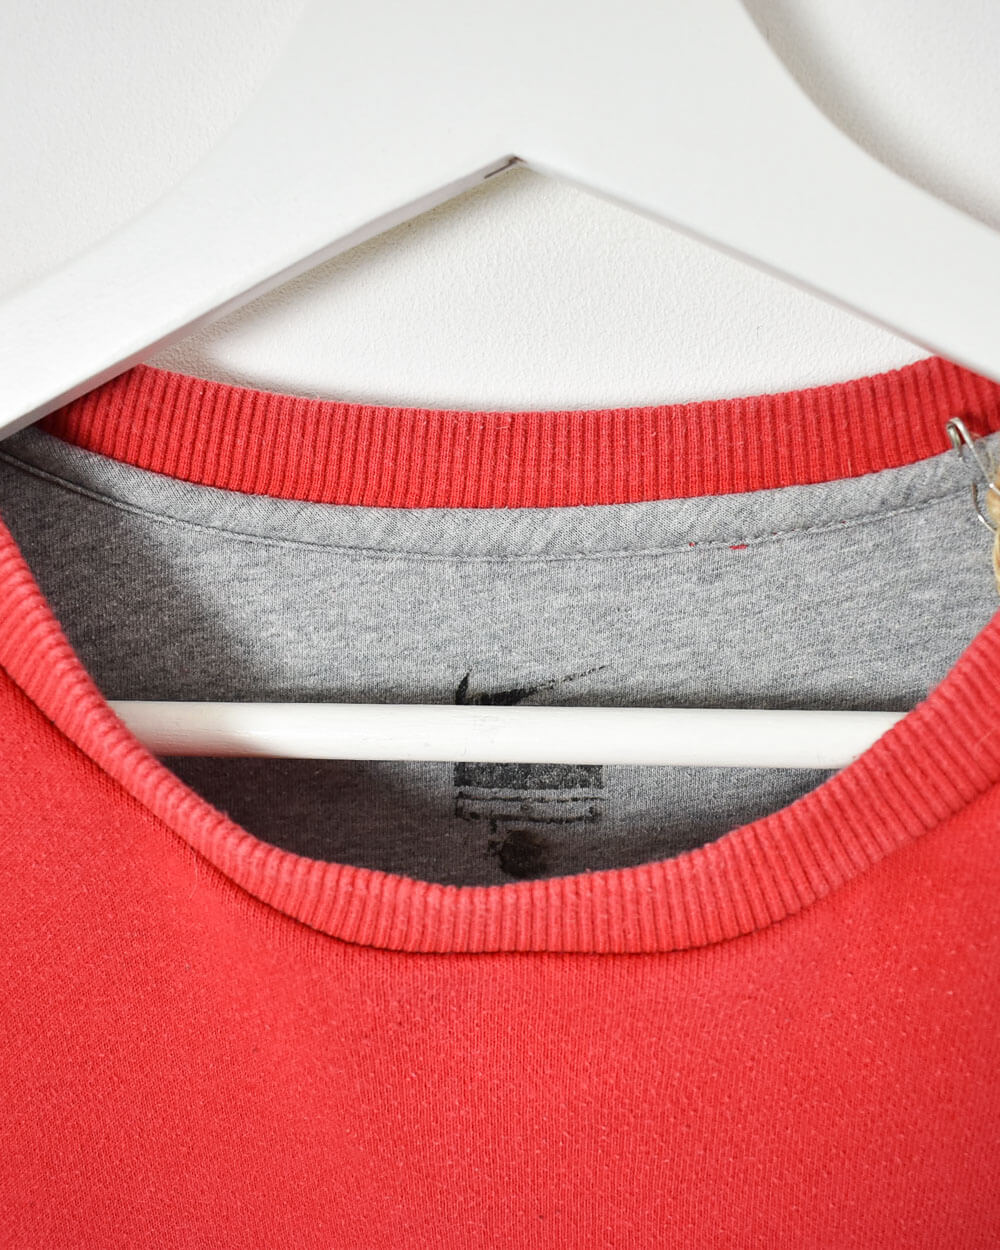 Nike Russia Hockey Sweatshirt - Large - Domno Vintage 90s, 80s, 00s Retro and Vintage Clothing 